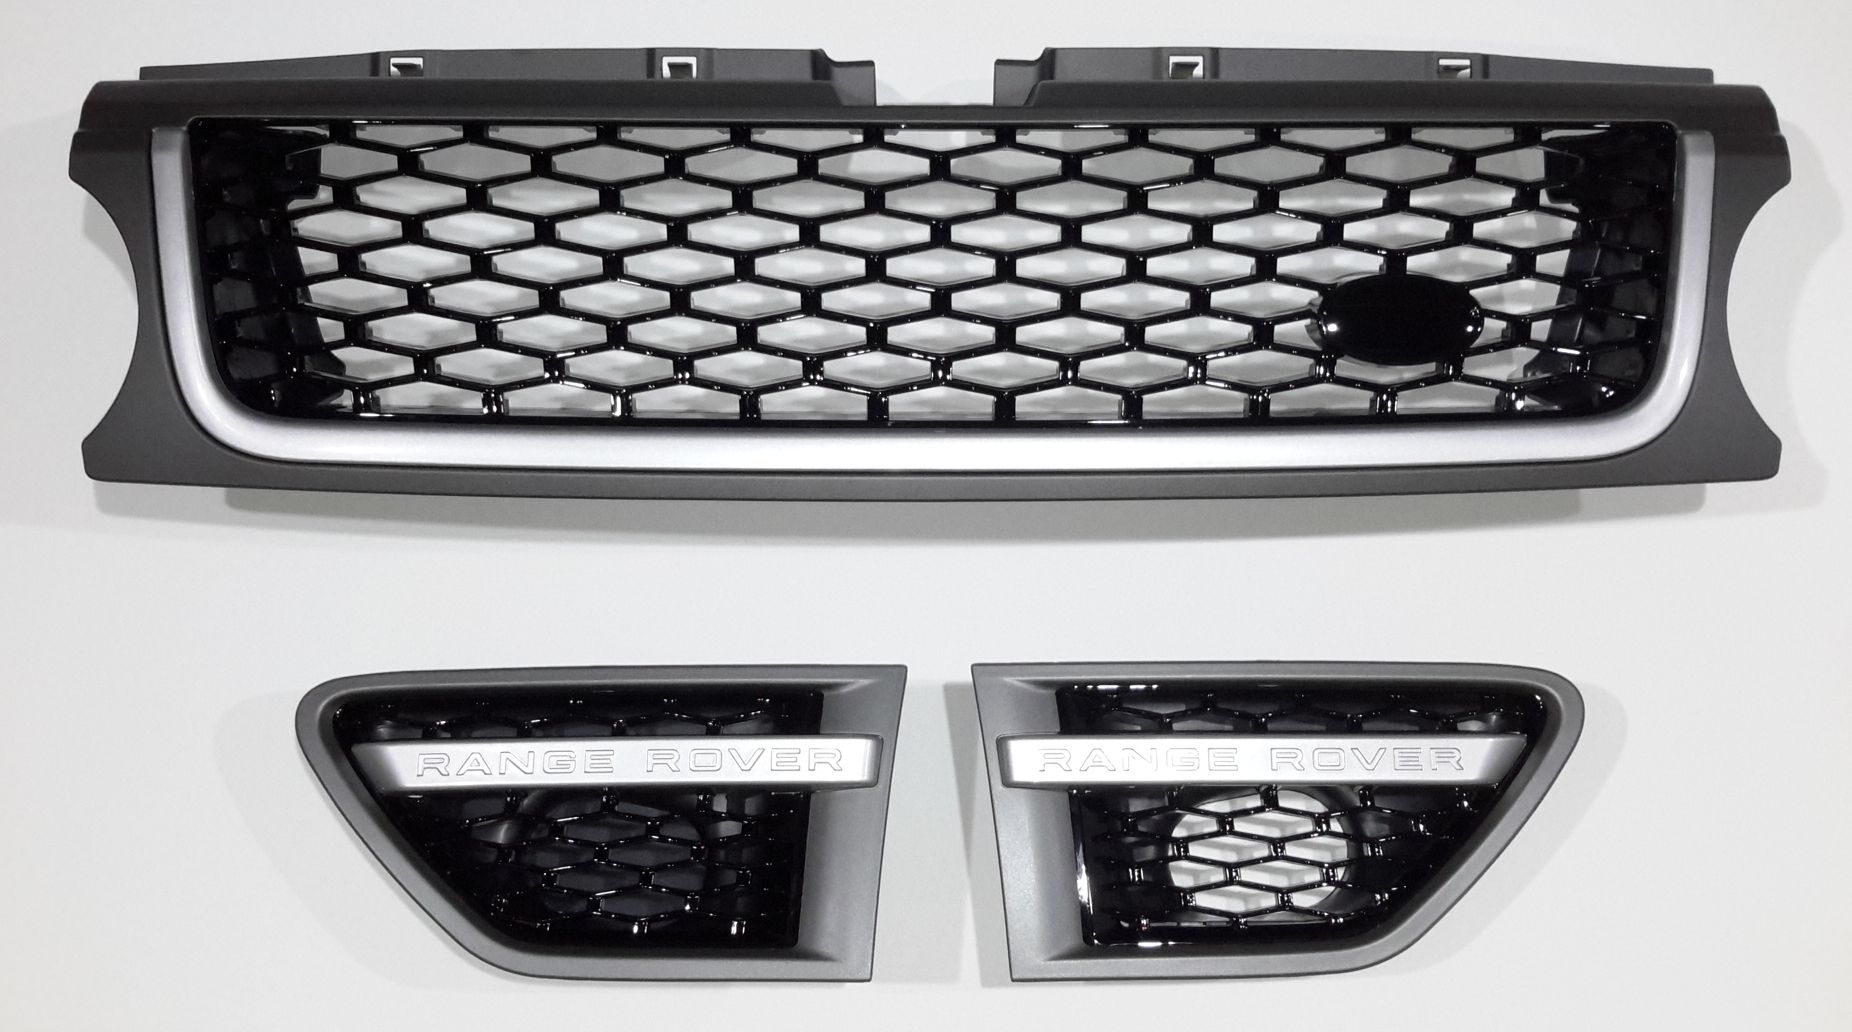 Комплект решеток Range Rover Sport 2010 Autobigraphy. Серый-серебро-черный